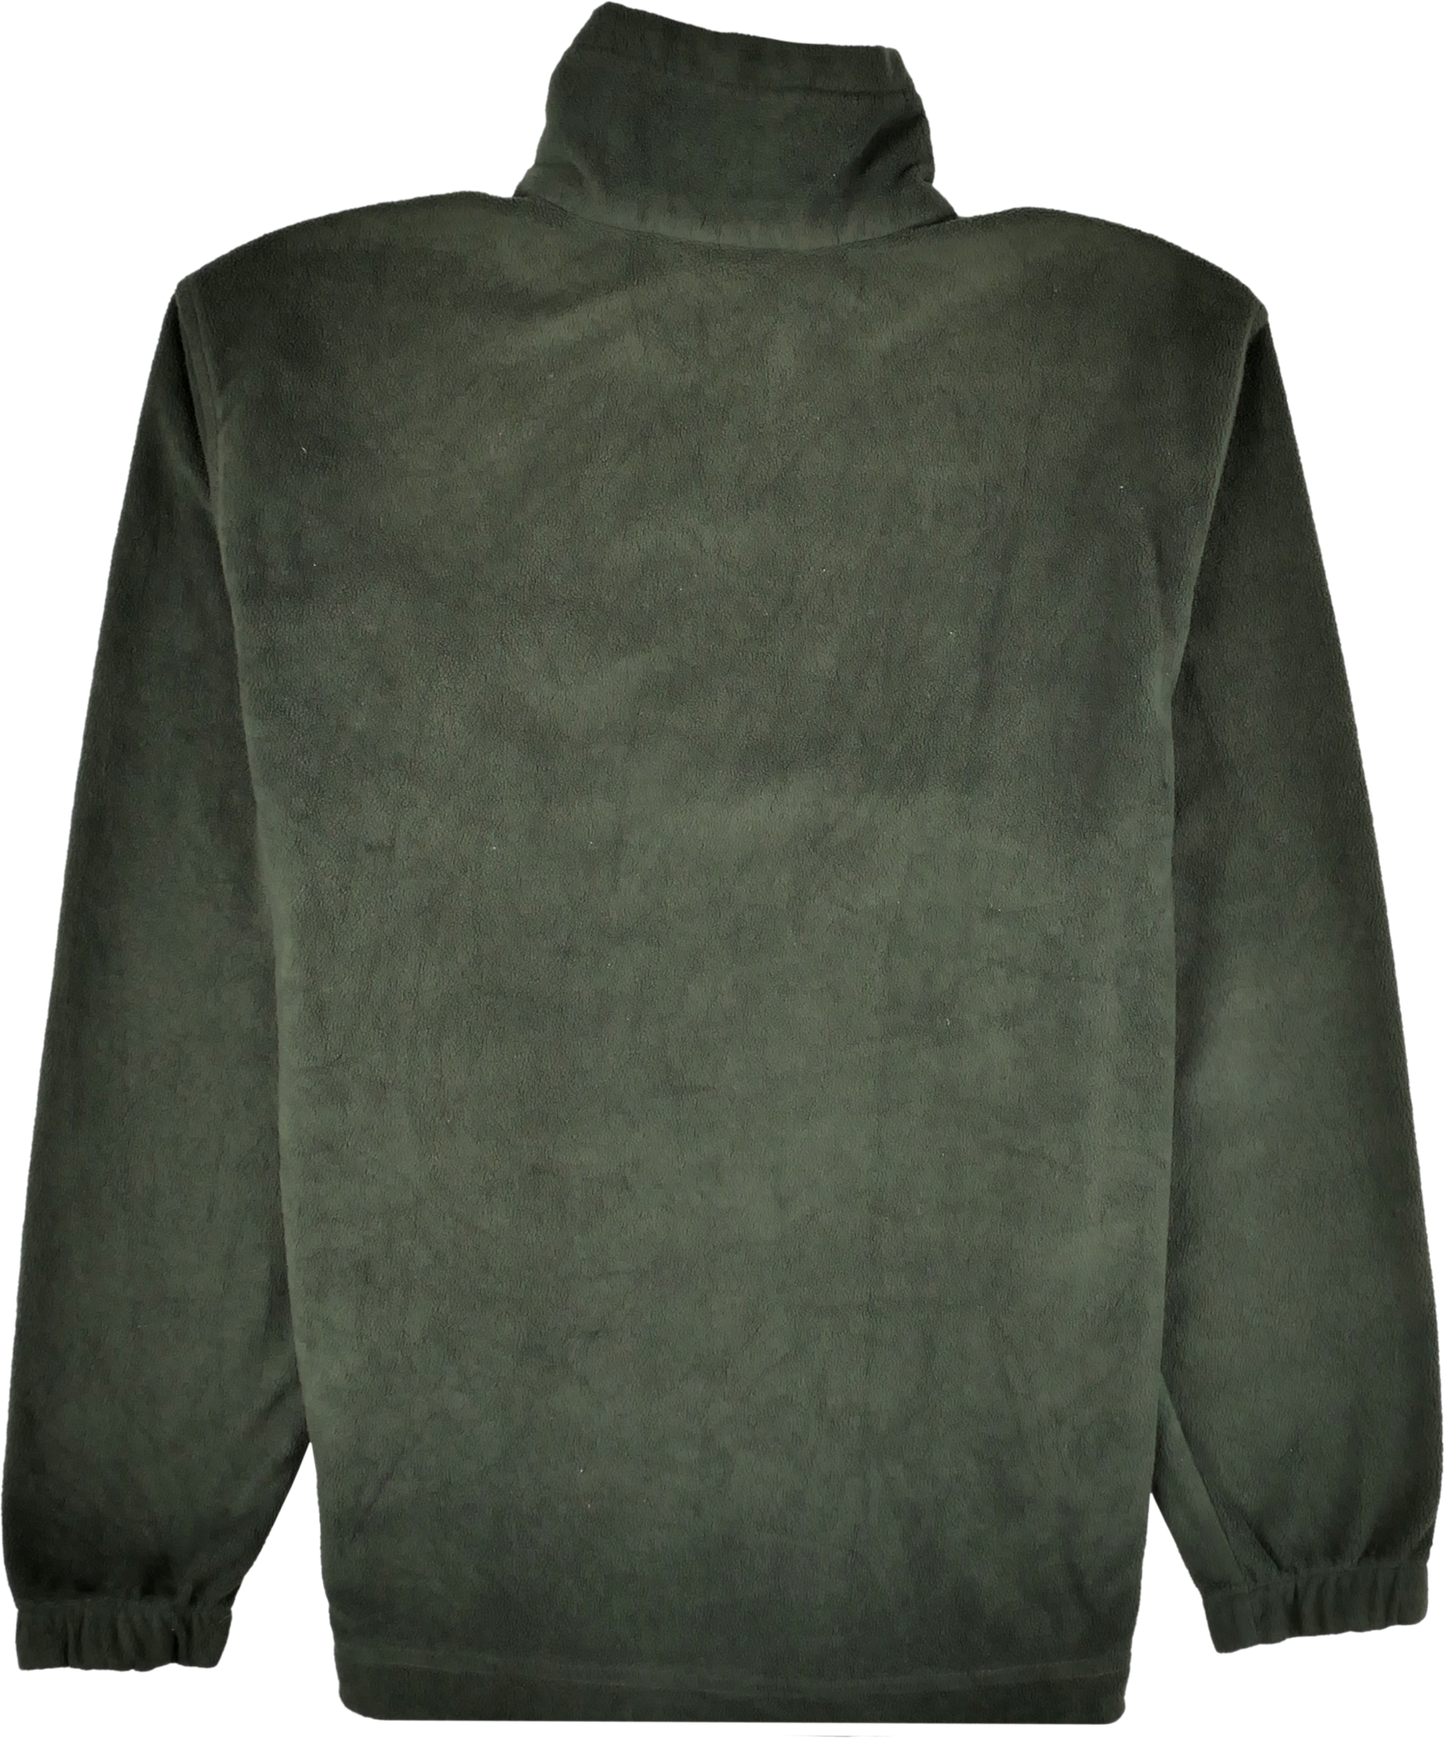 Columbia grün Fleece Jacke